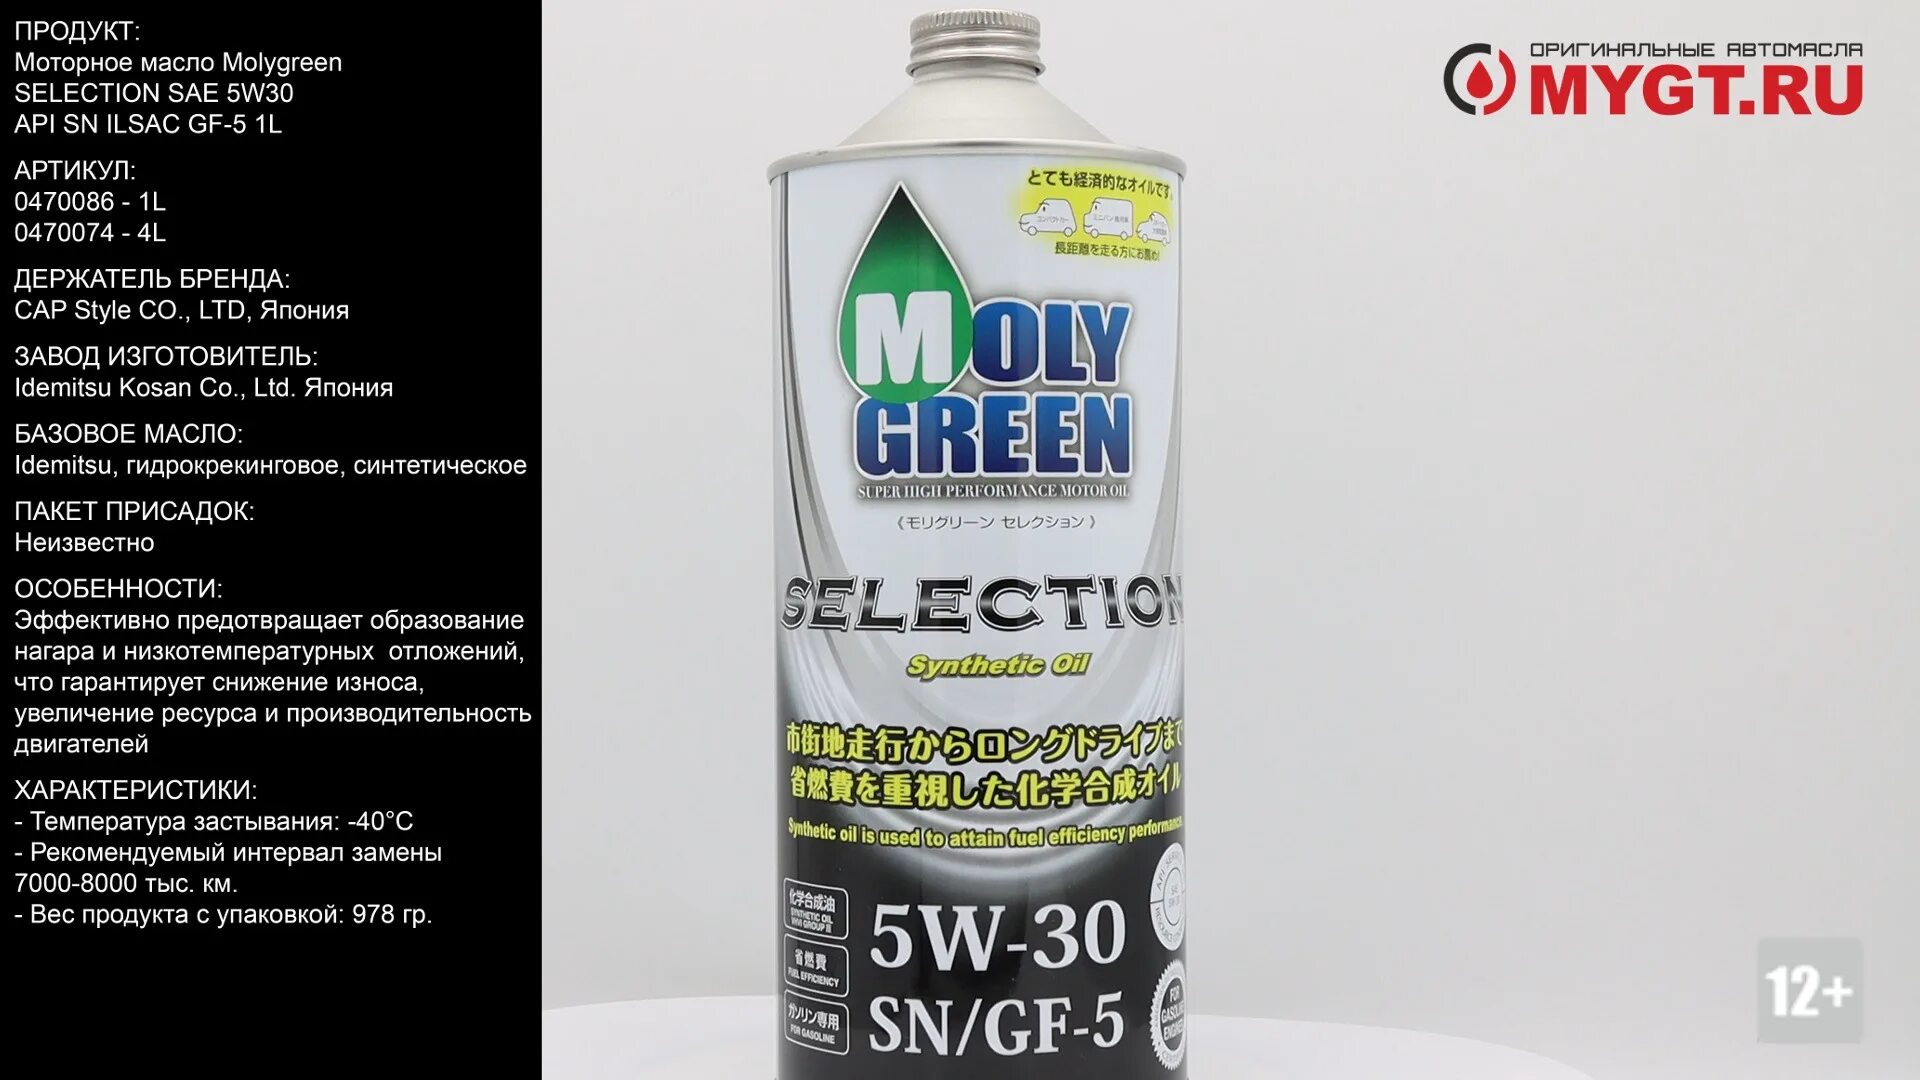 Масло молли грин 5w30. Moly Green 5w30 selection. Масло Moly Green 5w30 selection. Moly Green selection 5w30 4л 0470074. Moly Green Premium Black SAE 5w-30 API SN ILSAC gf-5 4l 0470022.